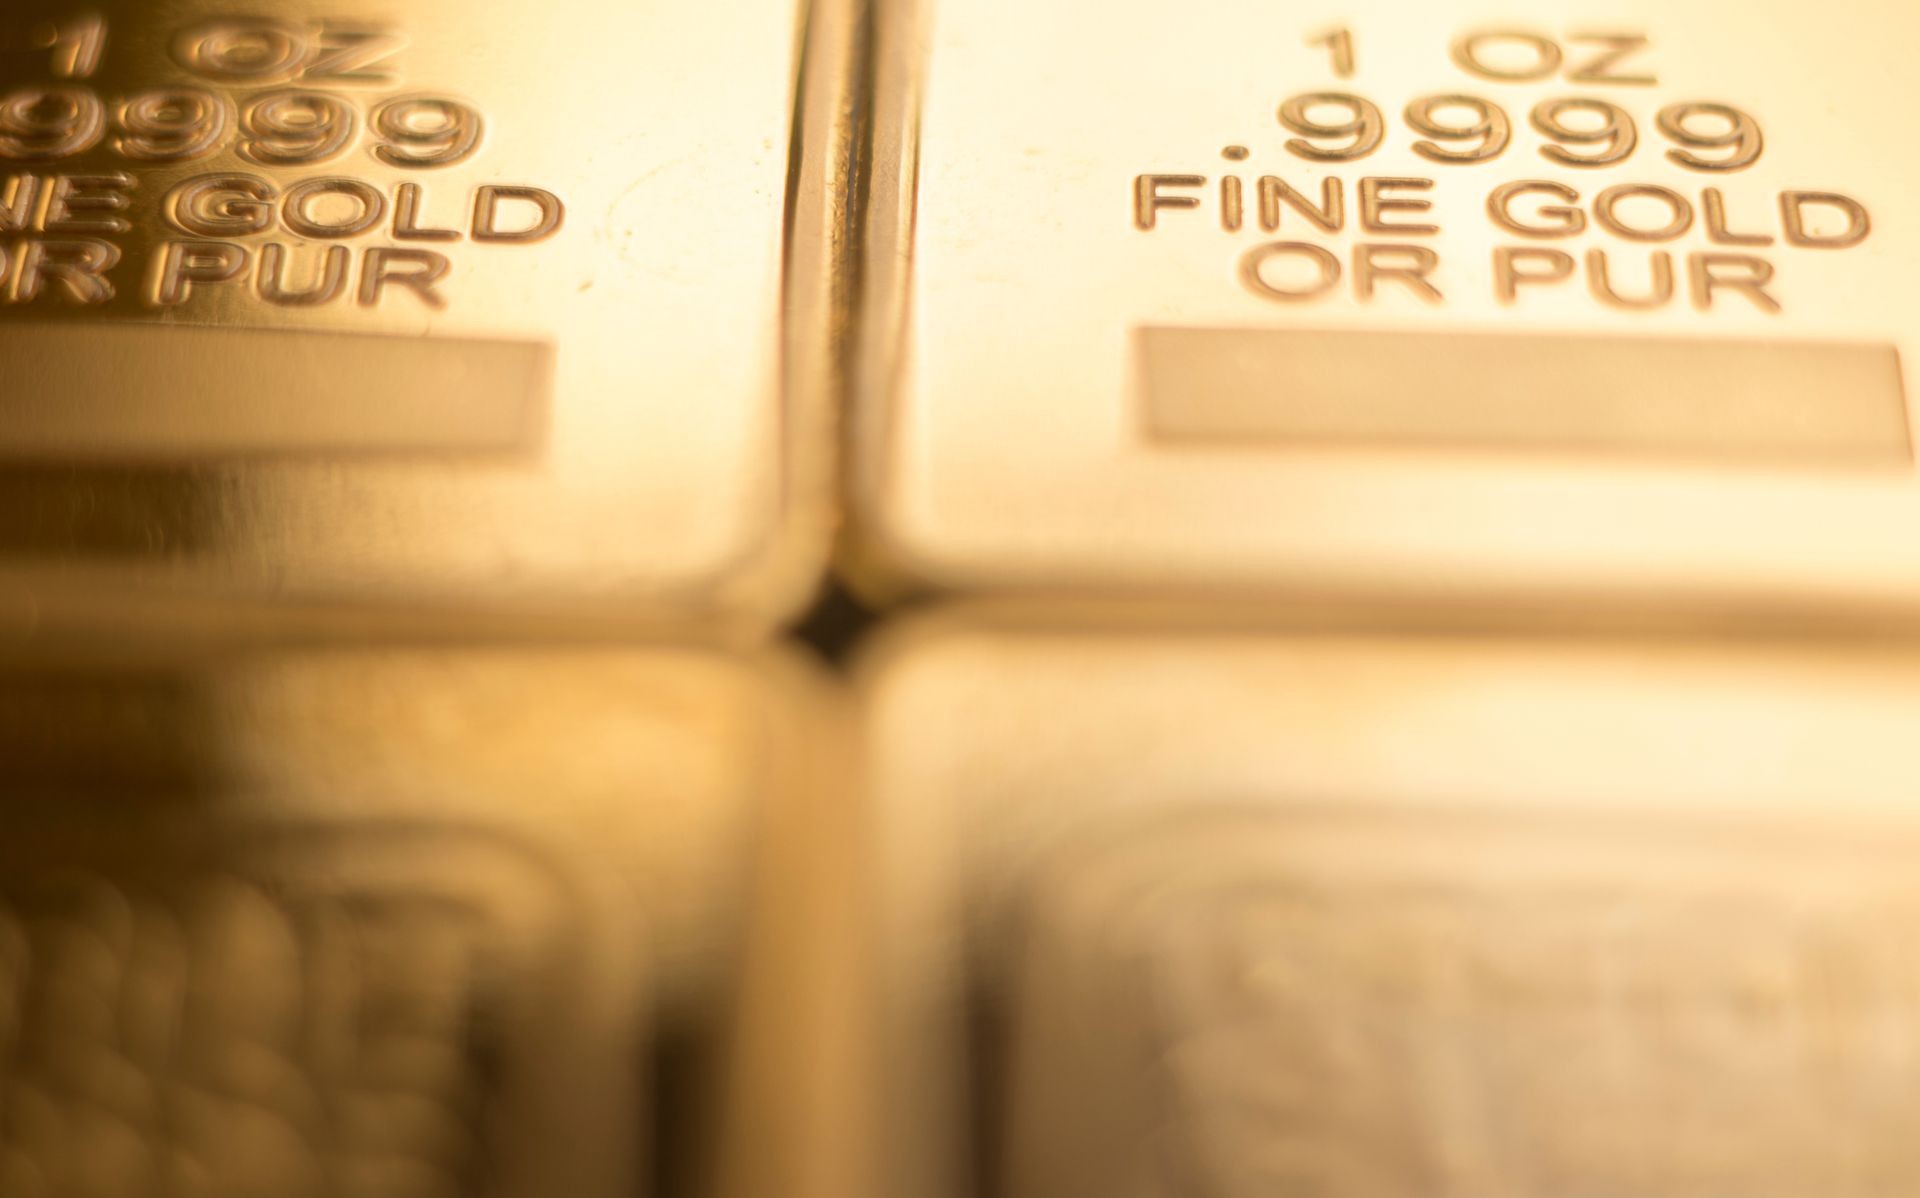 Gold bullion 999.9 purity solid one ounce ingot precious metal bars.